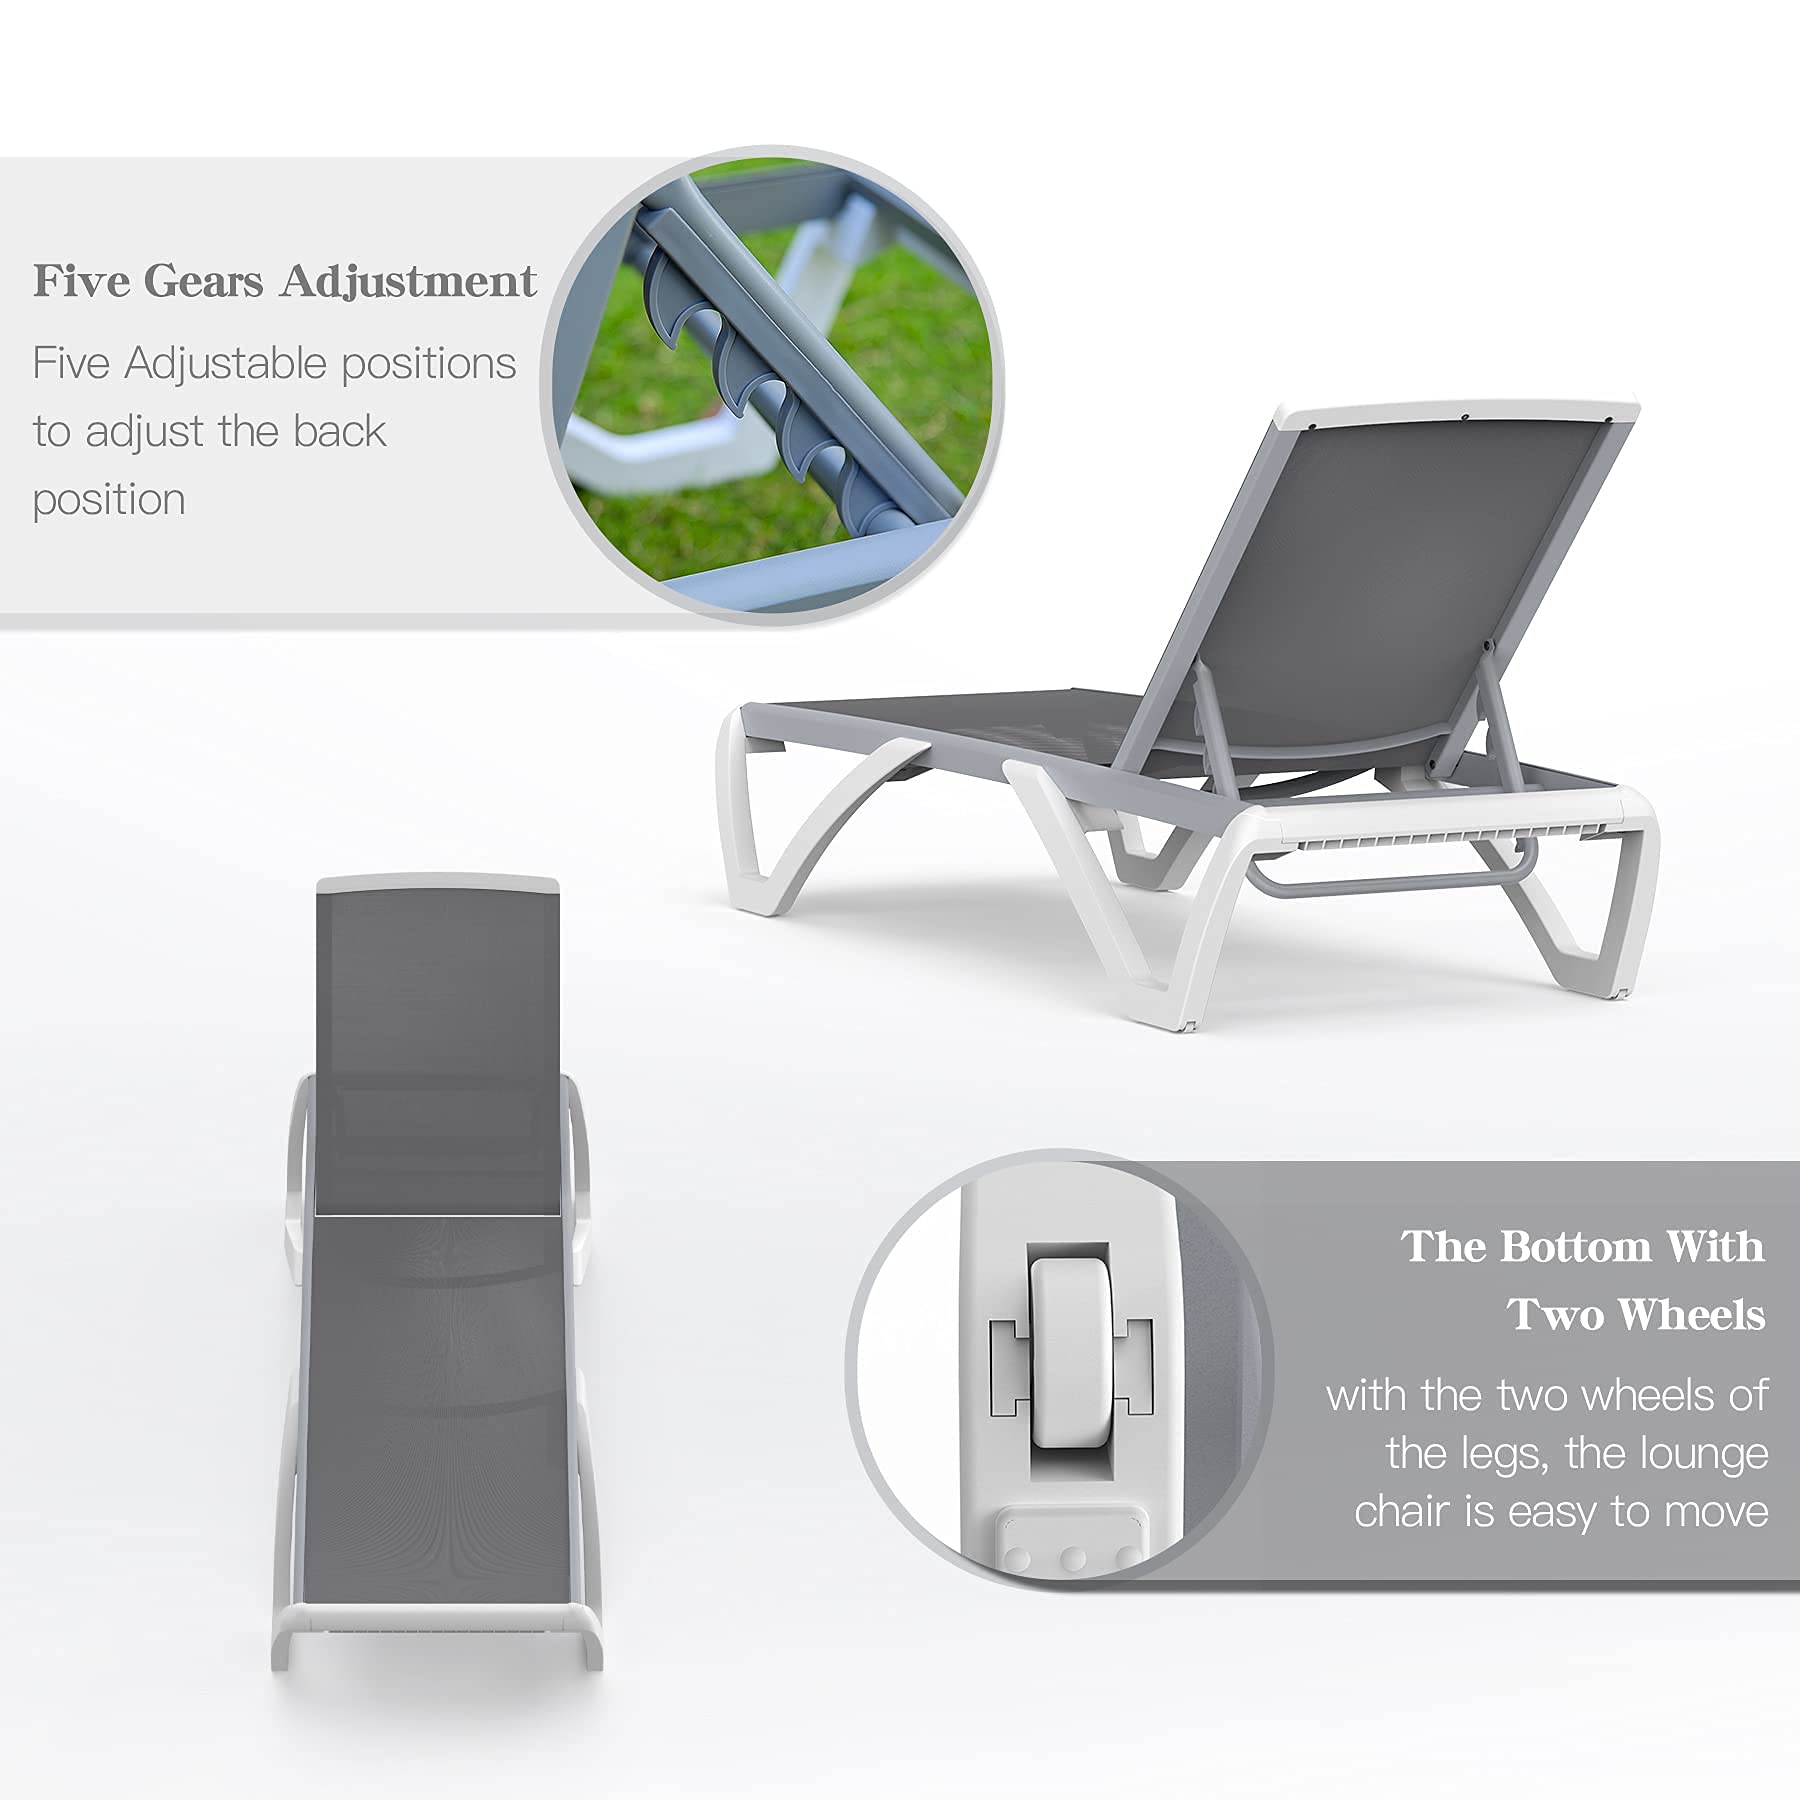 Mydepot Domi Patio Chaise Lounge, Outdoor Aluminum, Polypropylene, Adjustable Backrest, Beach Chair - image 5 of 7